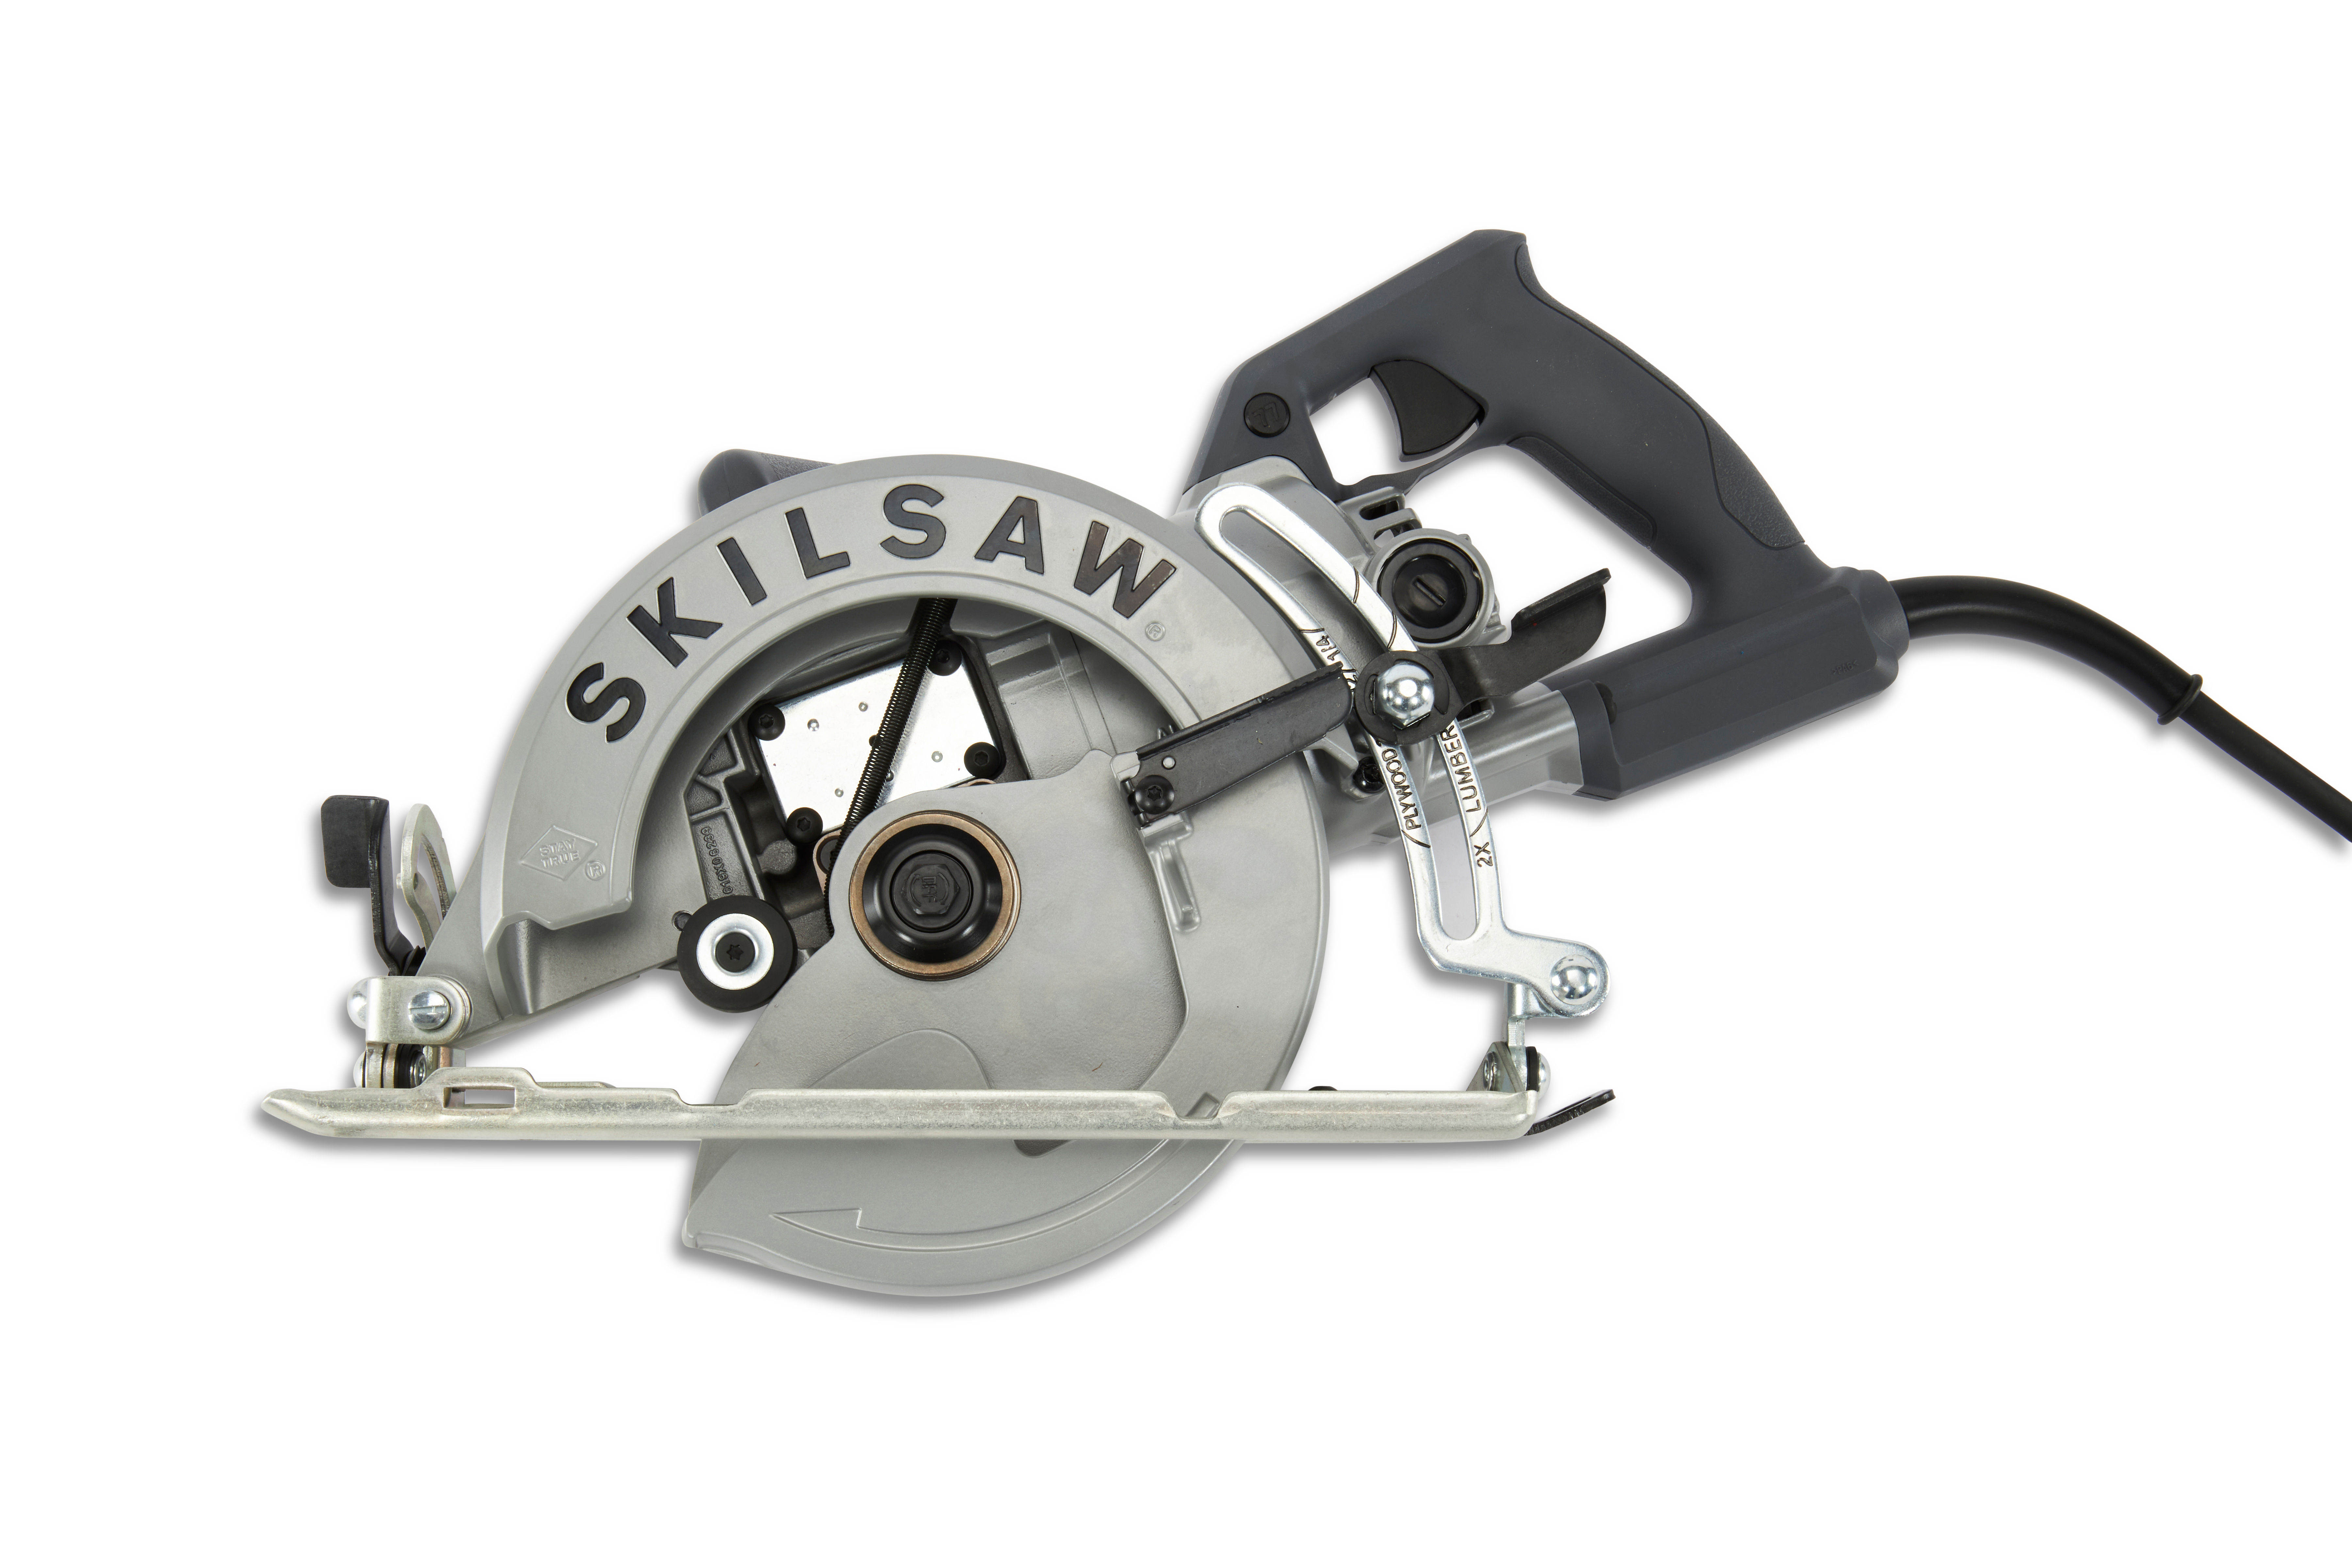 Skilsaw SKIL SPT77W 7-1/4" Worm Drive Circular Saw for sale online 